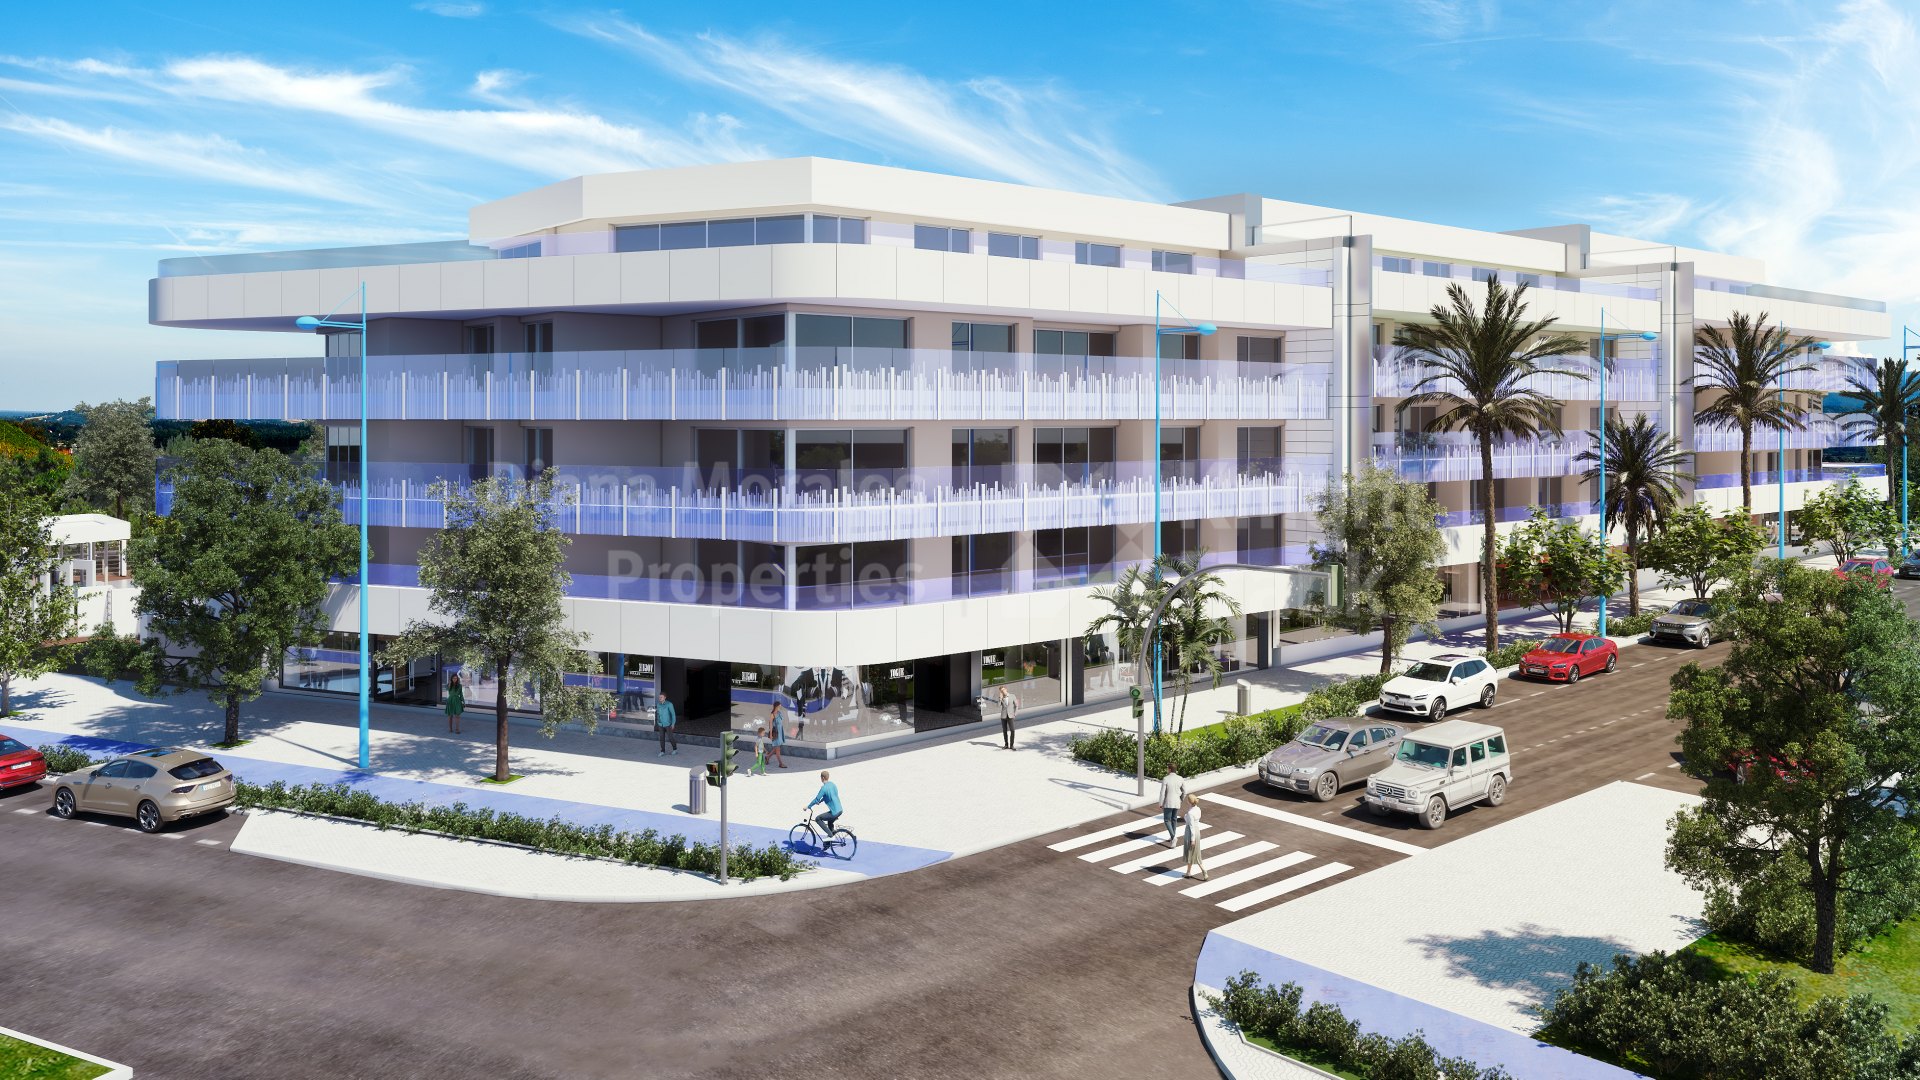 San Pedro Playa, Terra, a new complex of apartments near the beach